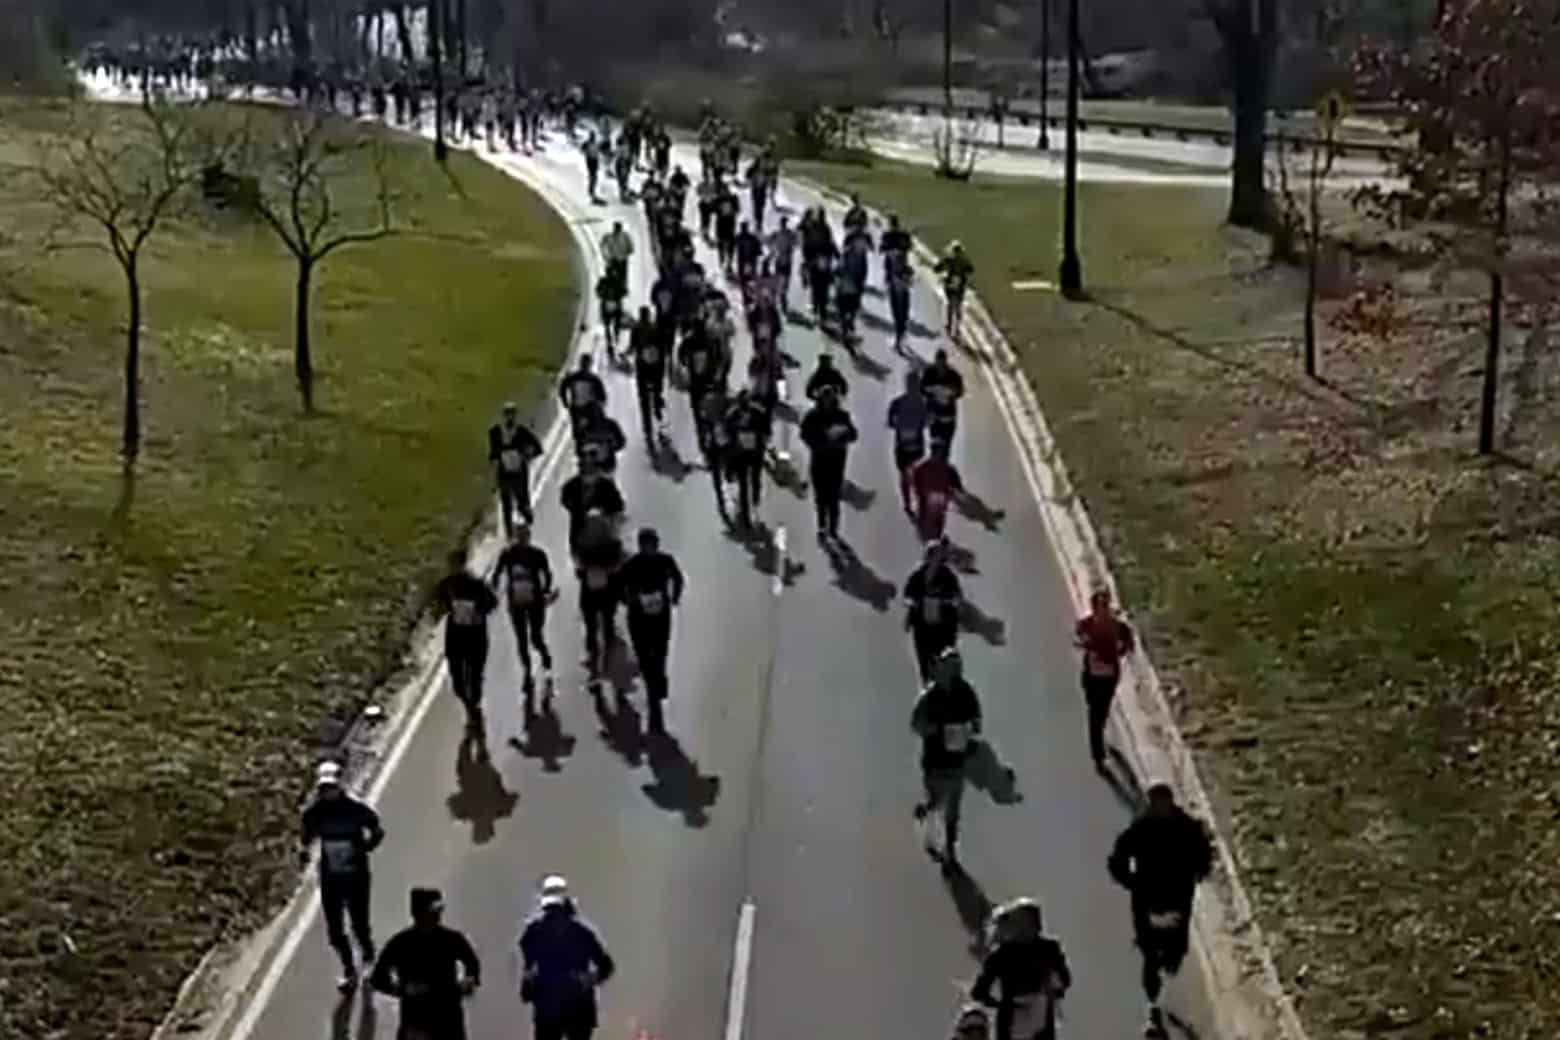 racers run through a park